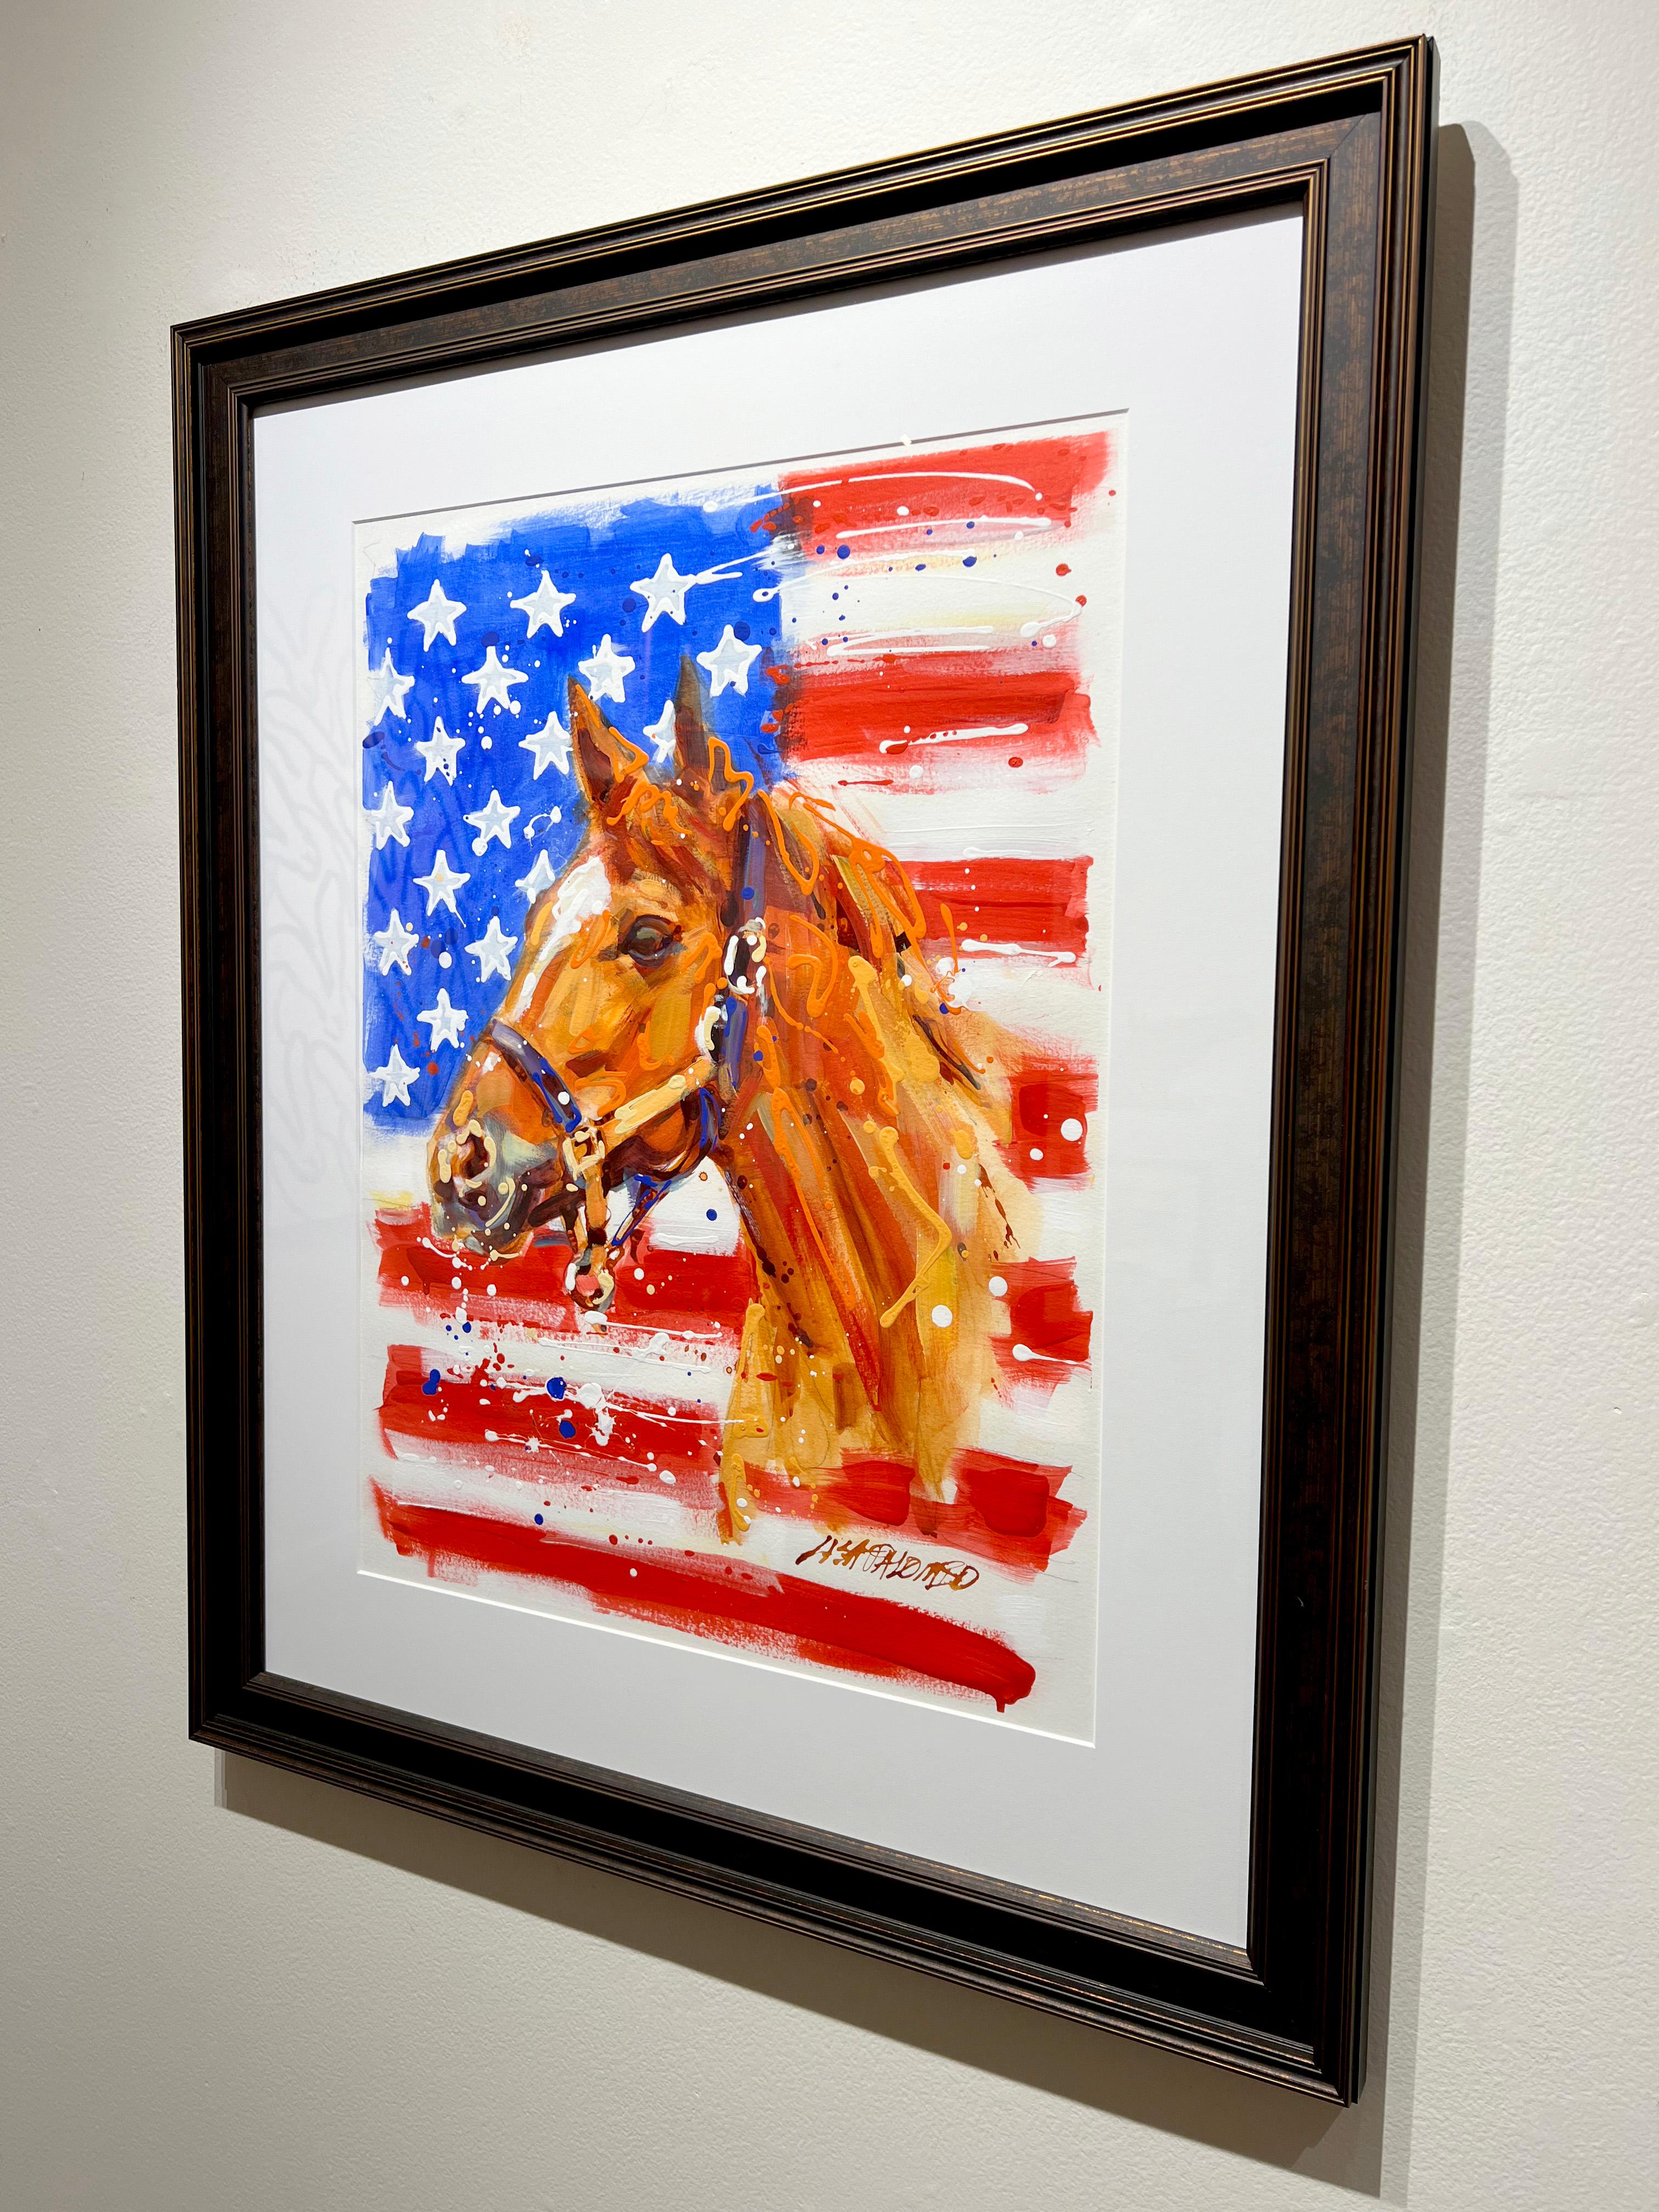 This bold and patriotic equine impressionist painting, 